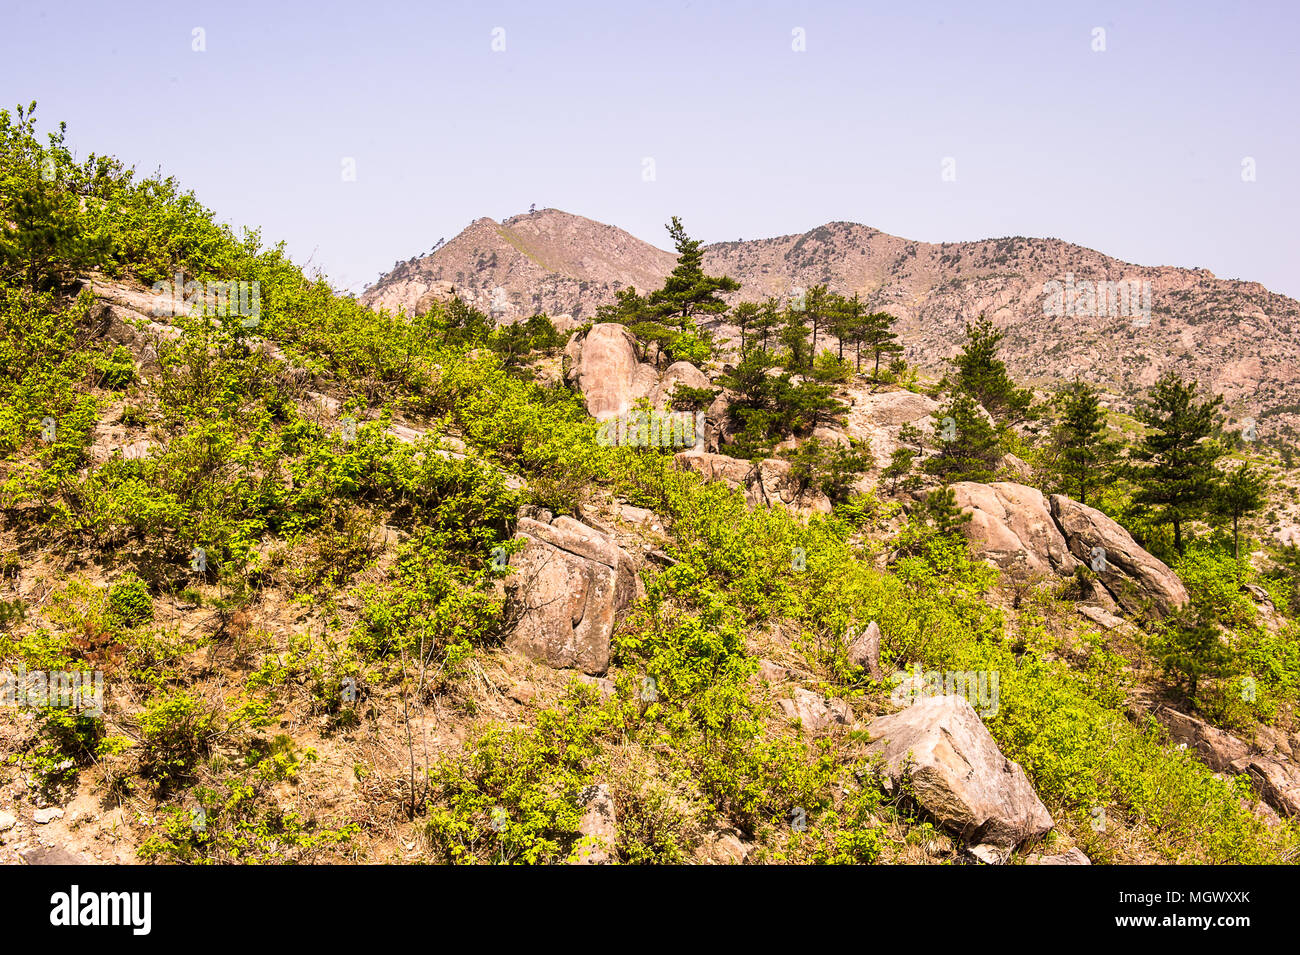 Mount Kumgang (Diamond Mountain) of the Mount Kumgang Tourist Region in North Korea Stock Photo